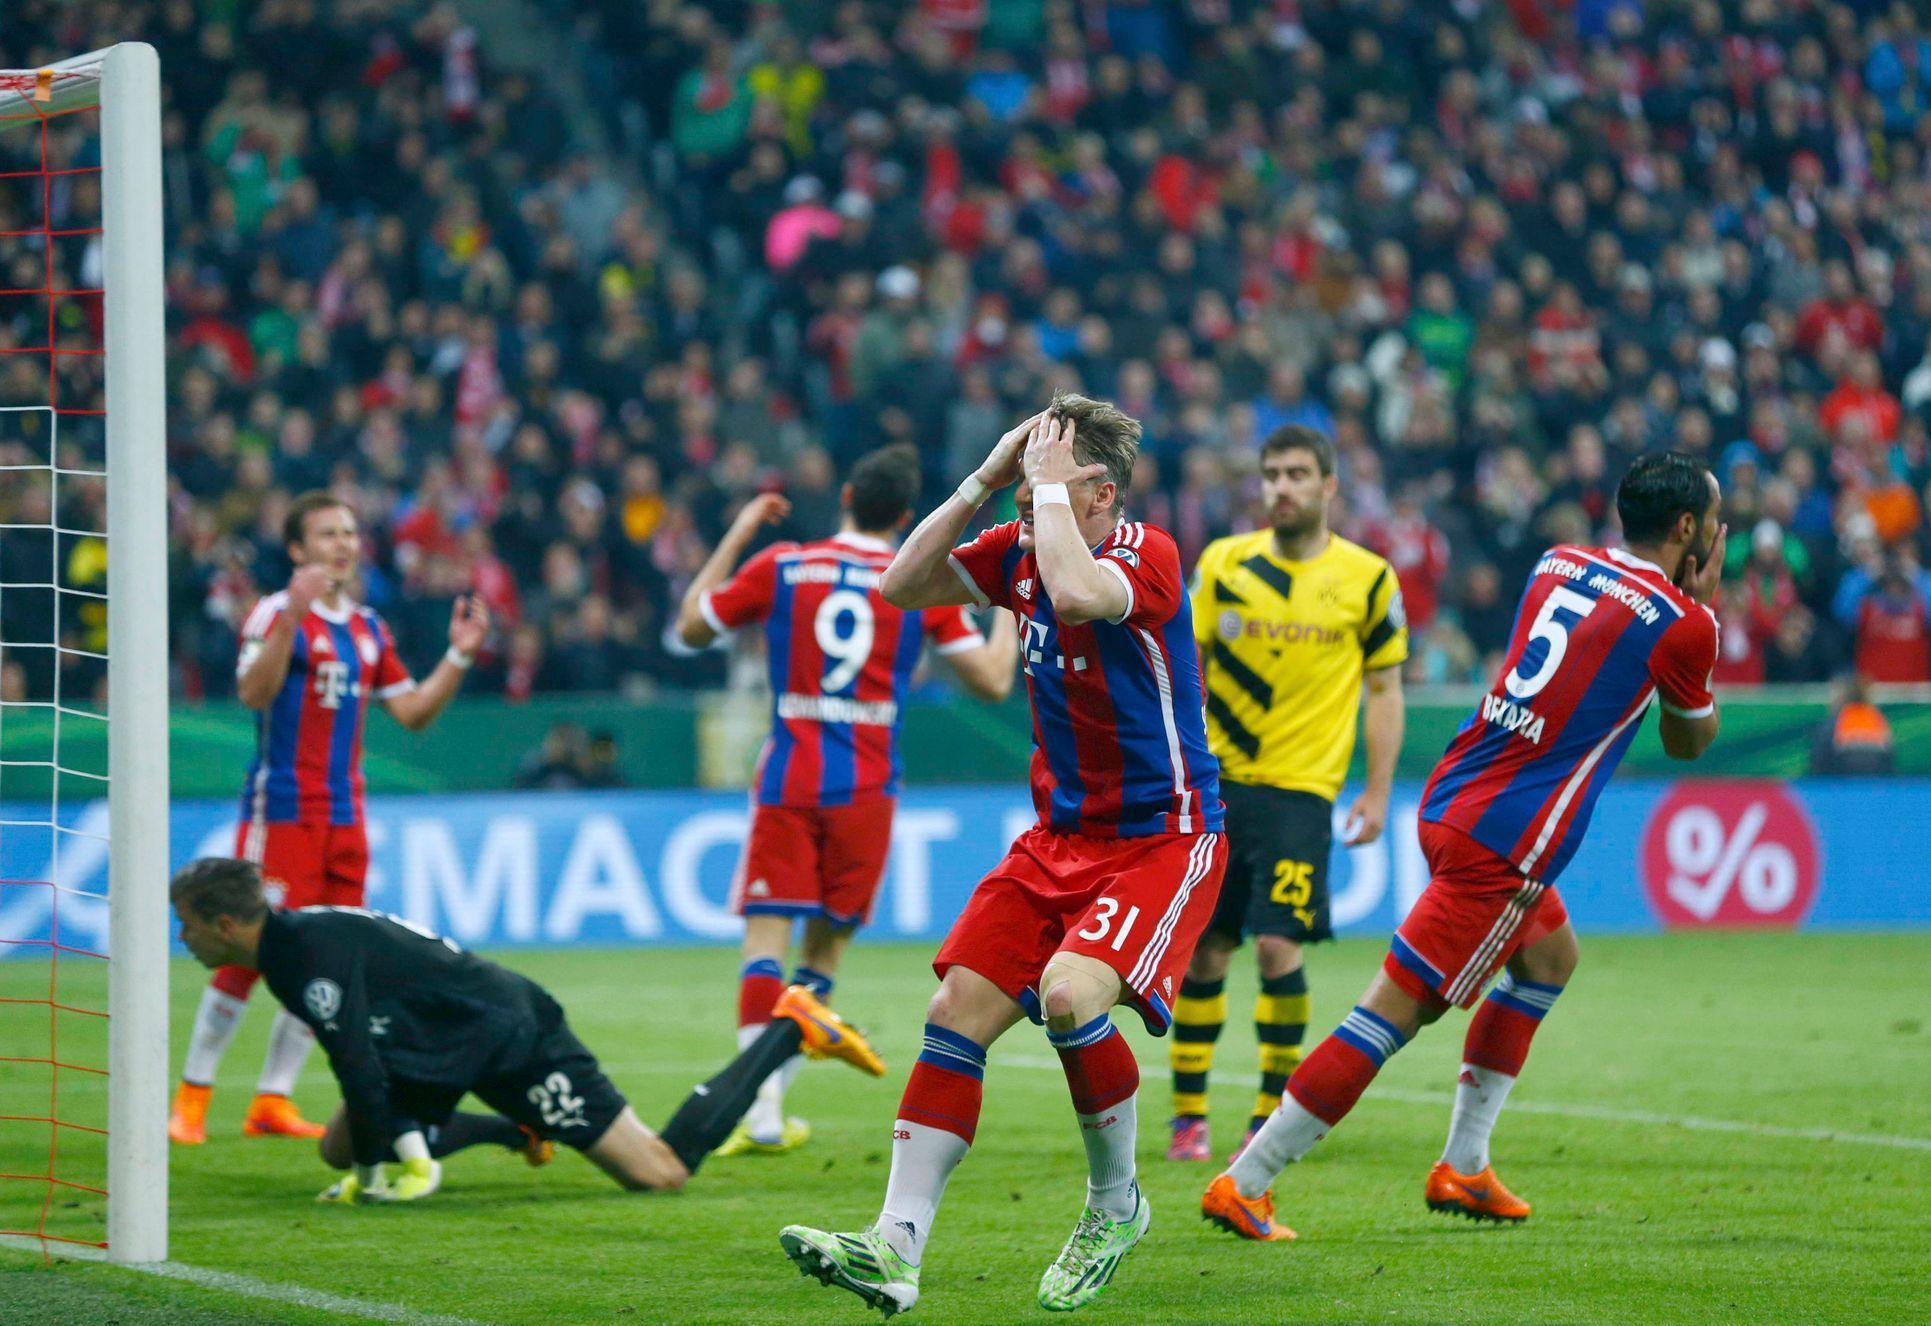 Bayern Munich's Schweinsteiger reacts after missing chance to score against Borussia Dortmund during German Cup semi-final soccer match in Munich